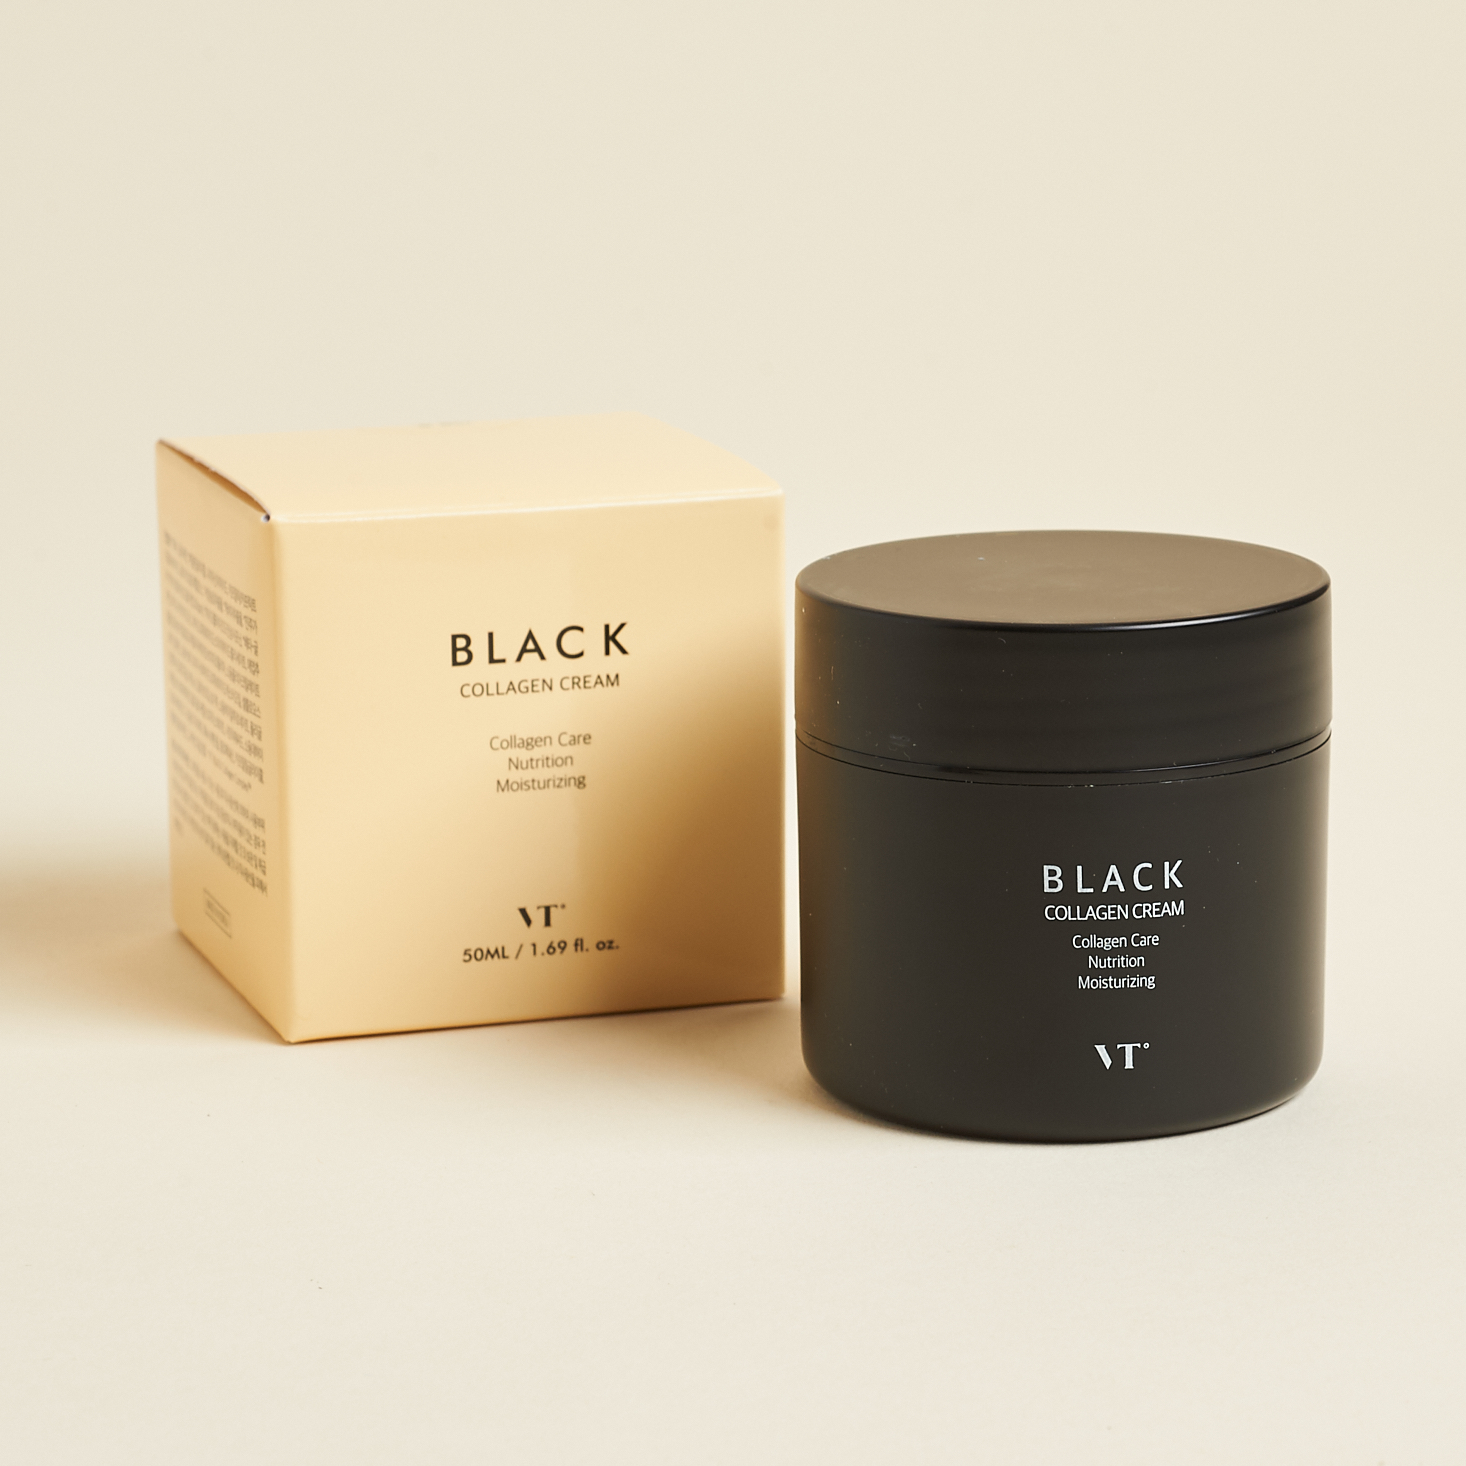 VT Black Collagen Cream with box